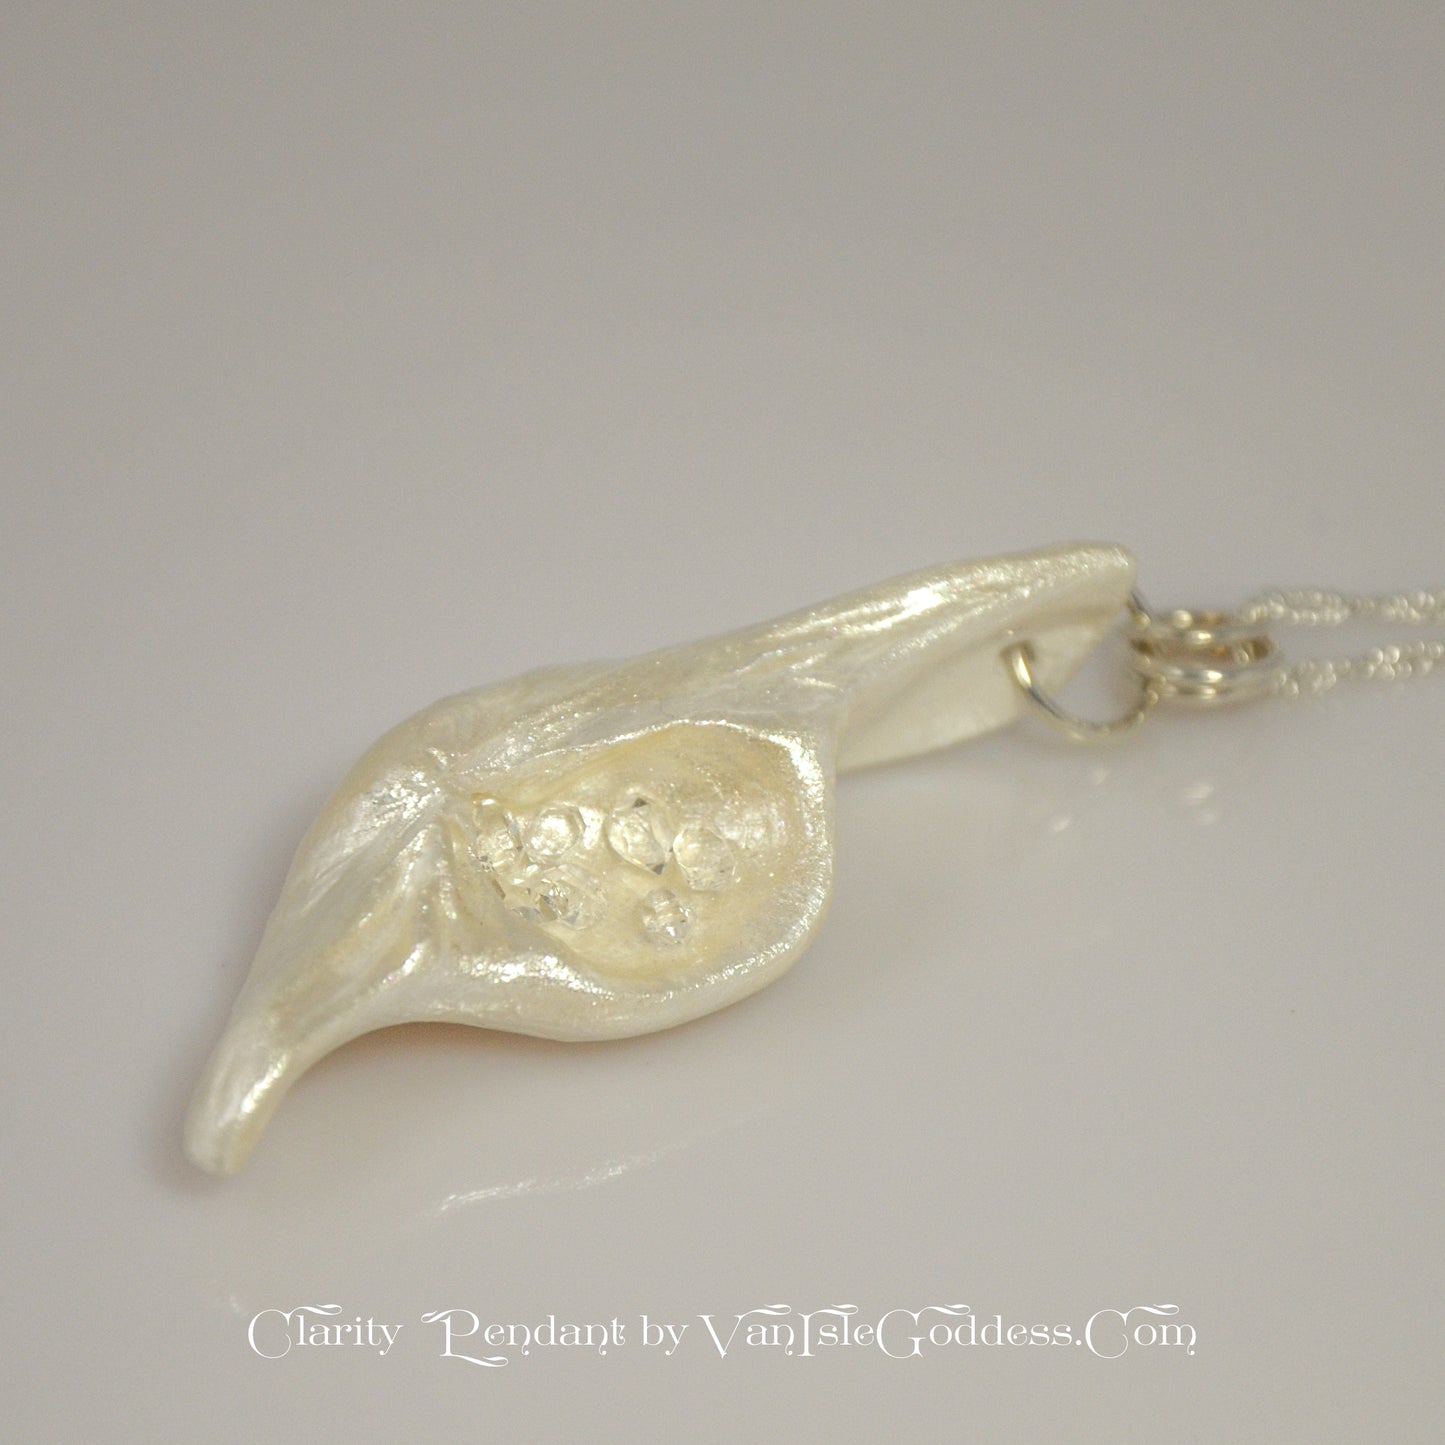 Clarity Seven Herkimer Diamonds Island Goddess Seashell Pendant